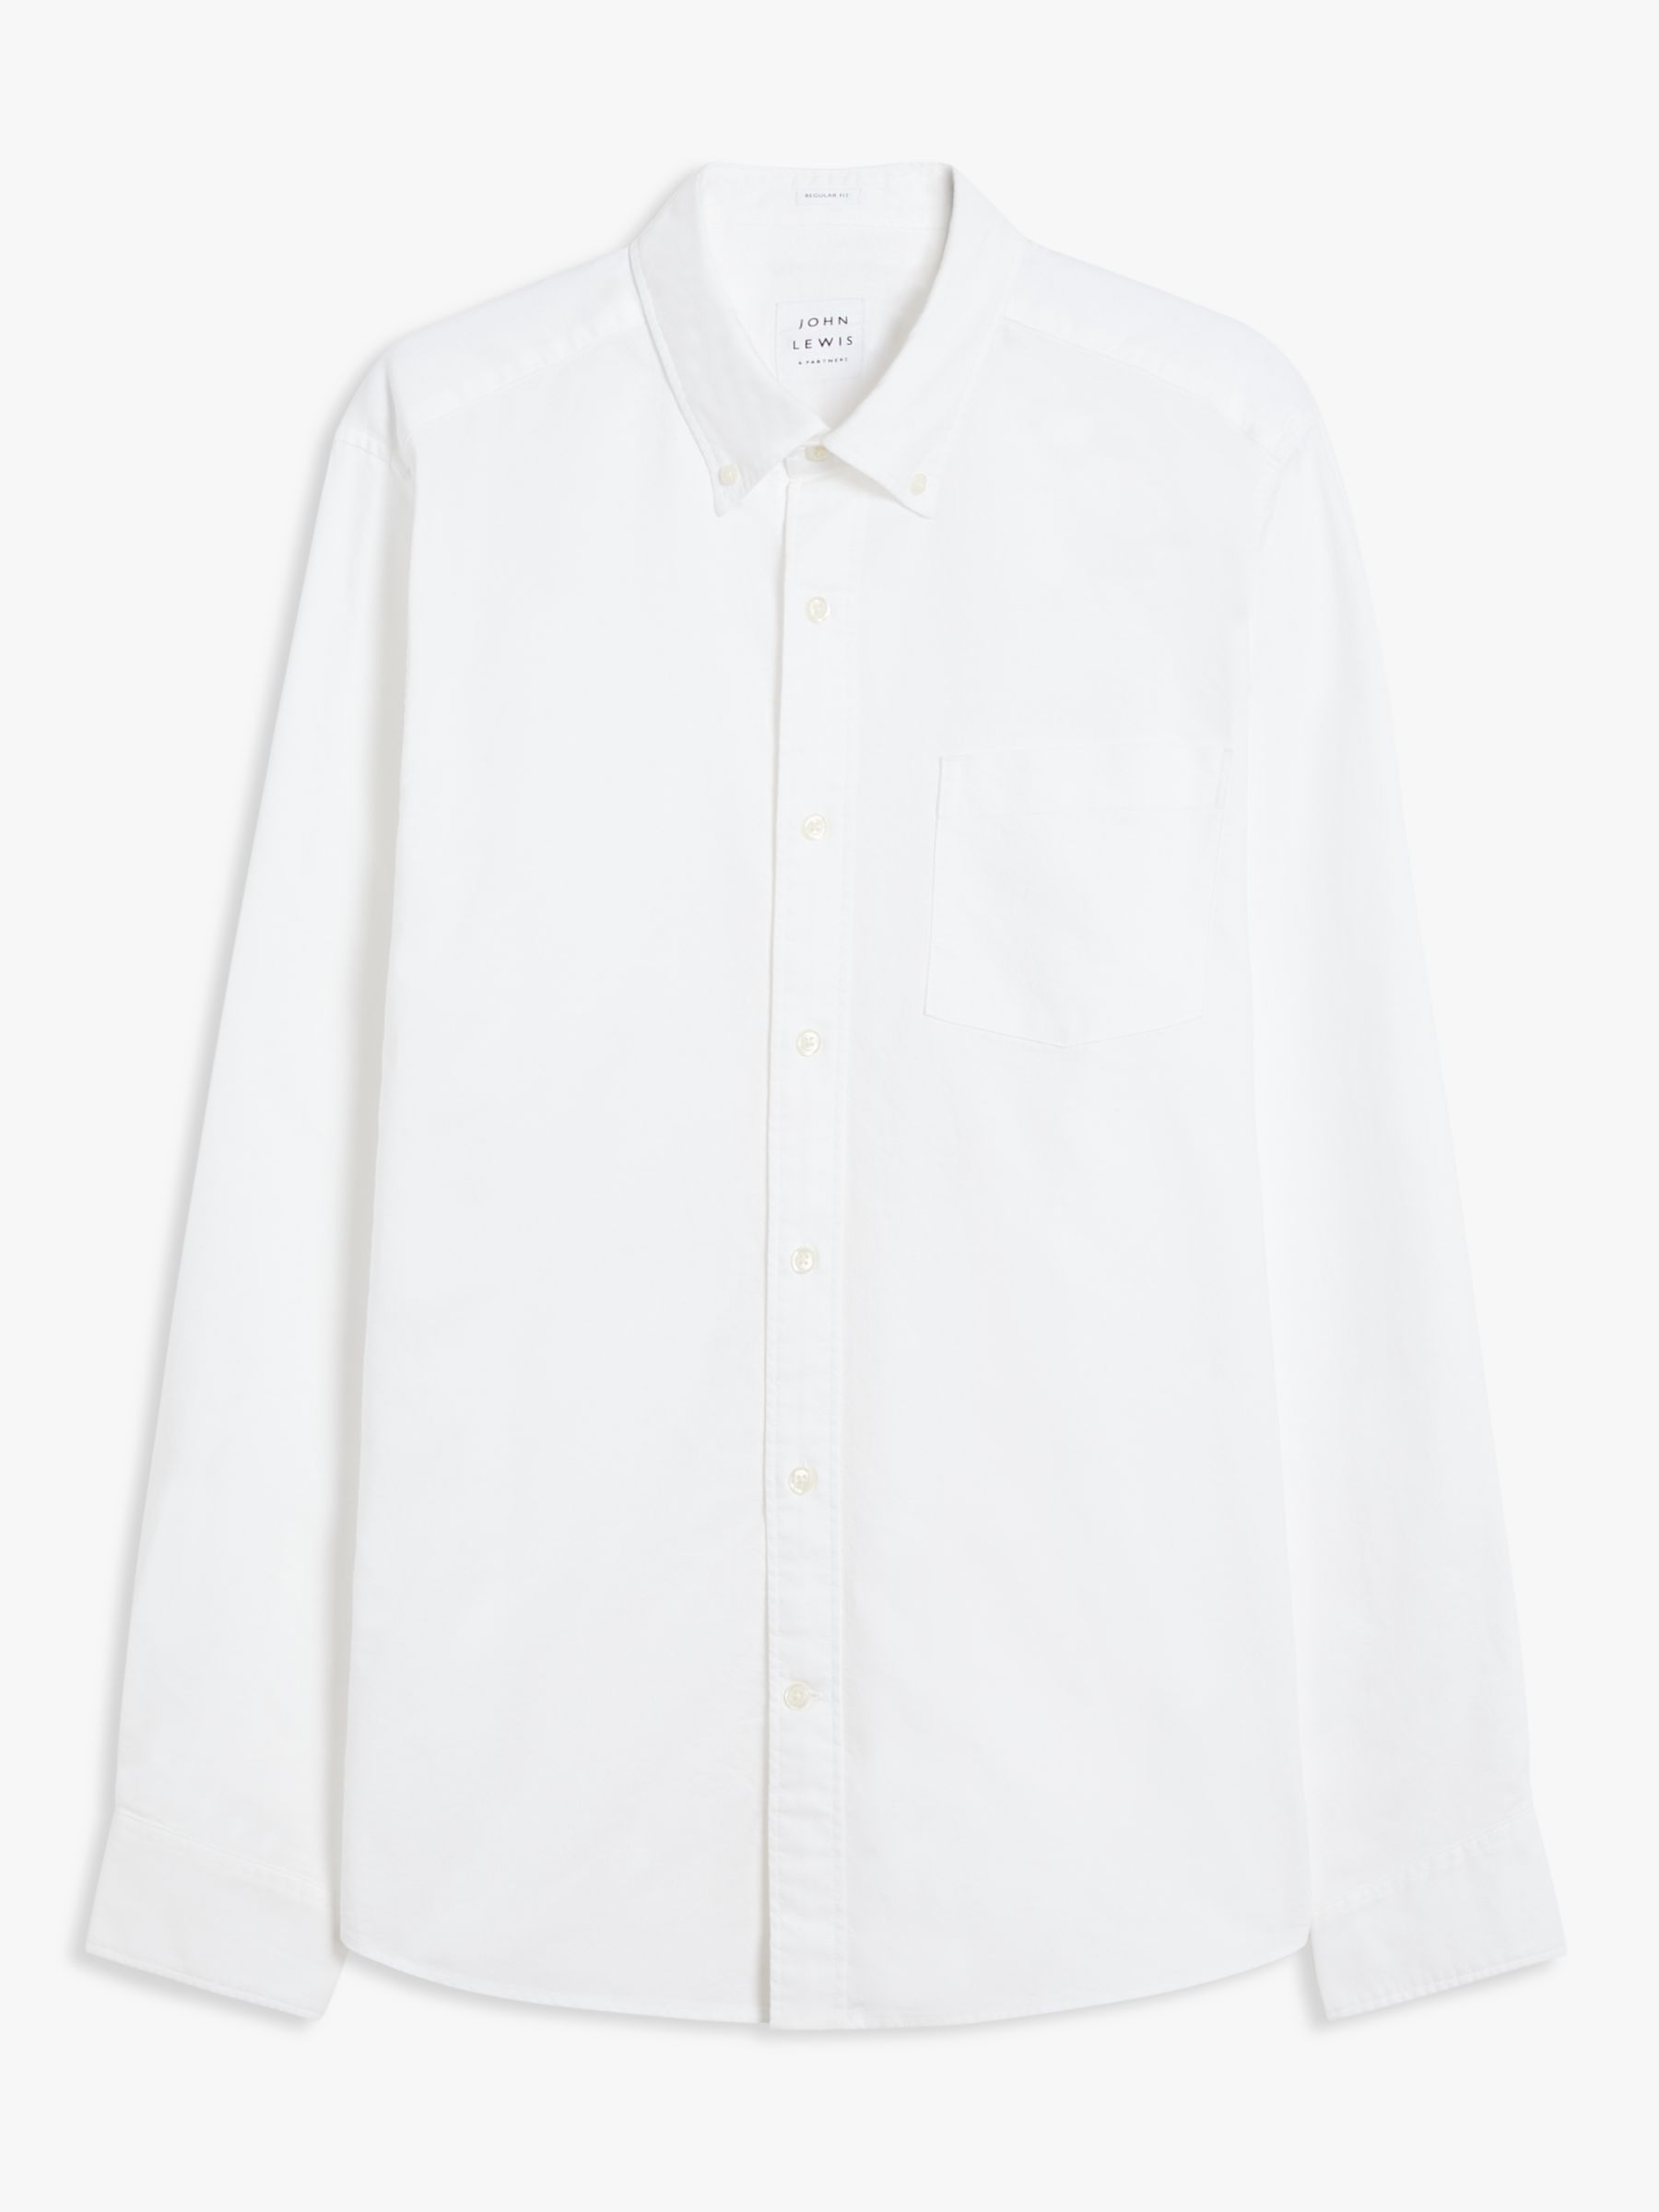 John Lewis Regular Fit Cotton Oxford Button Down Shirt, White at John ...